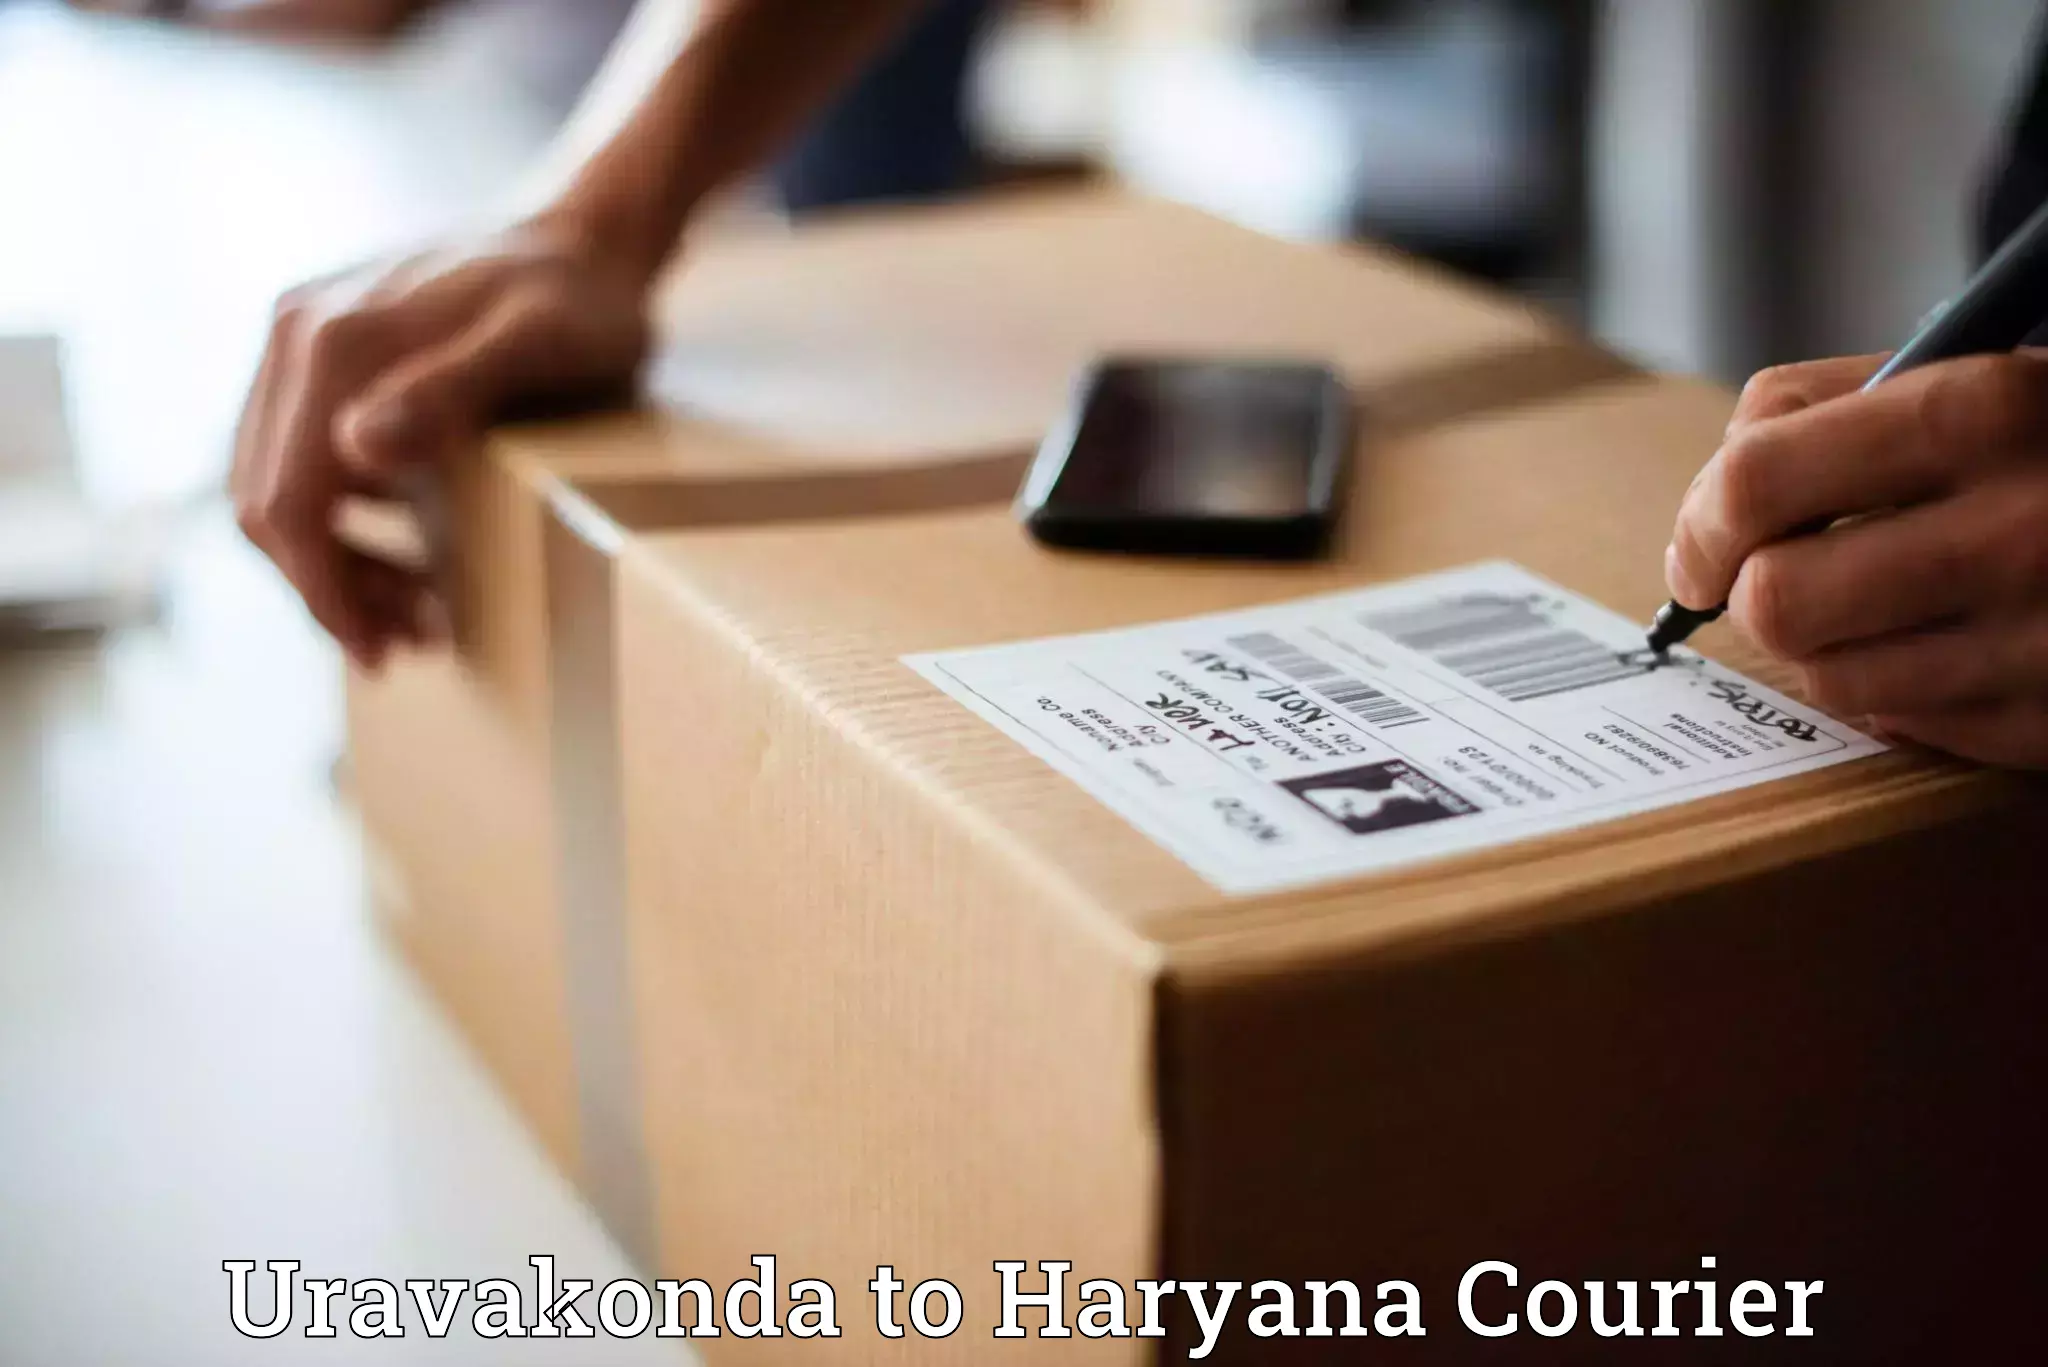 Fast delivery service Uravakonda to Bilaspur Haryana